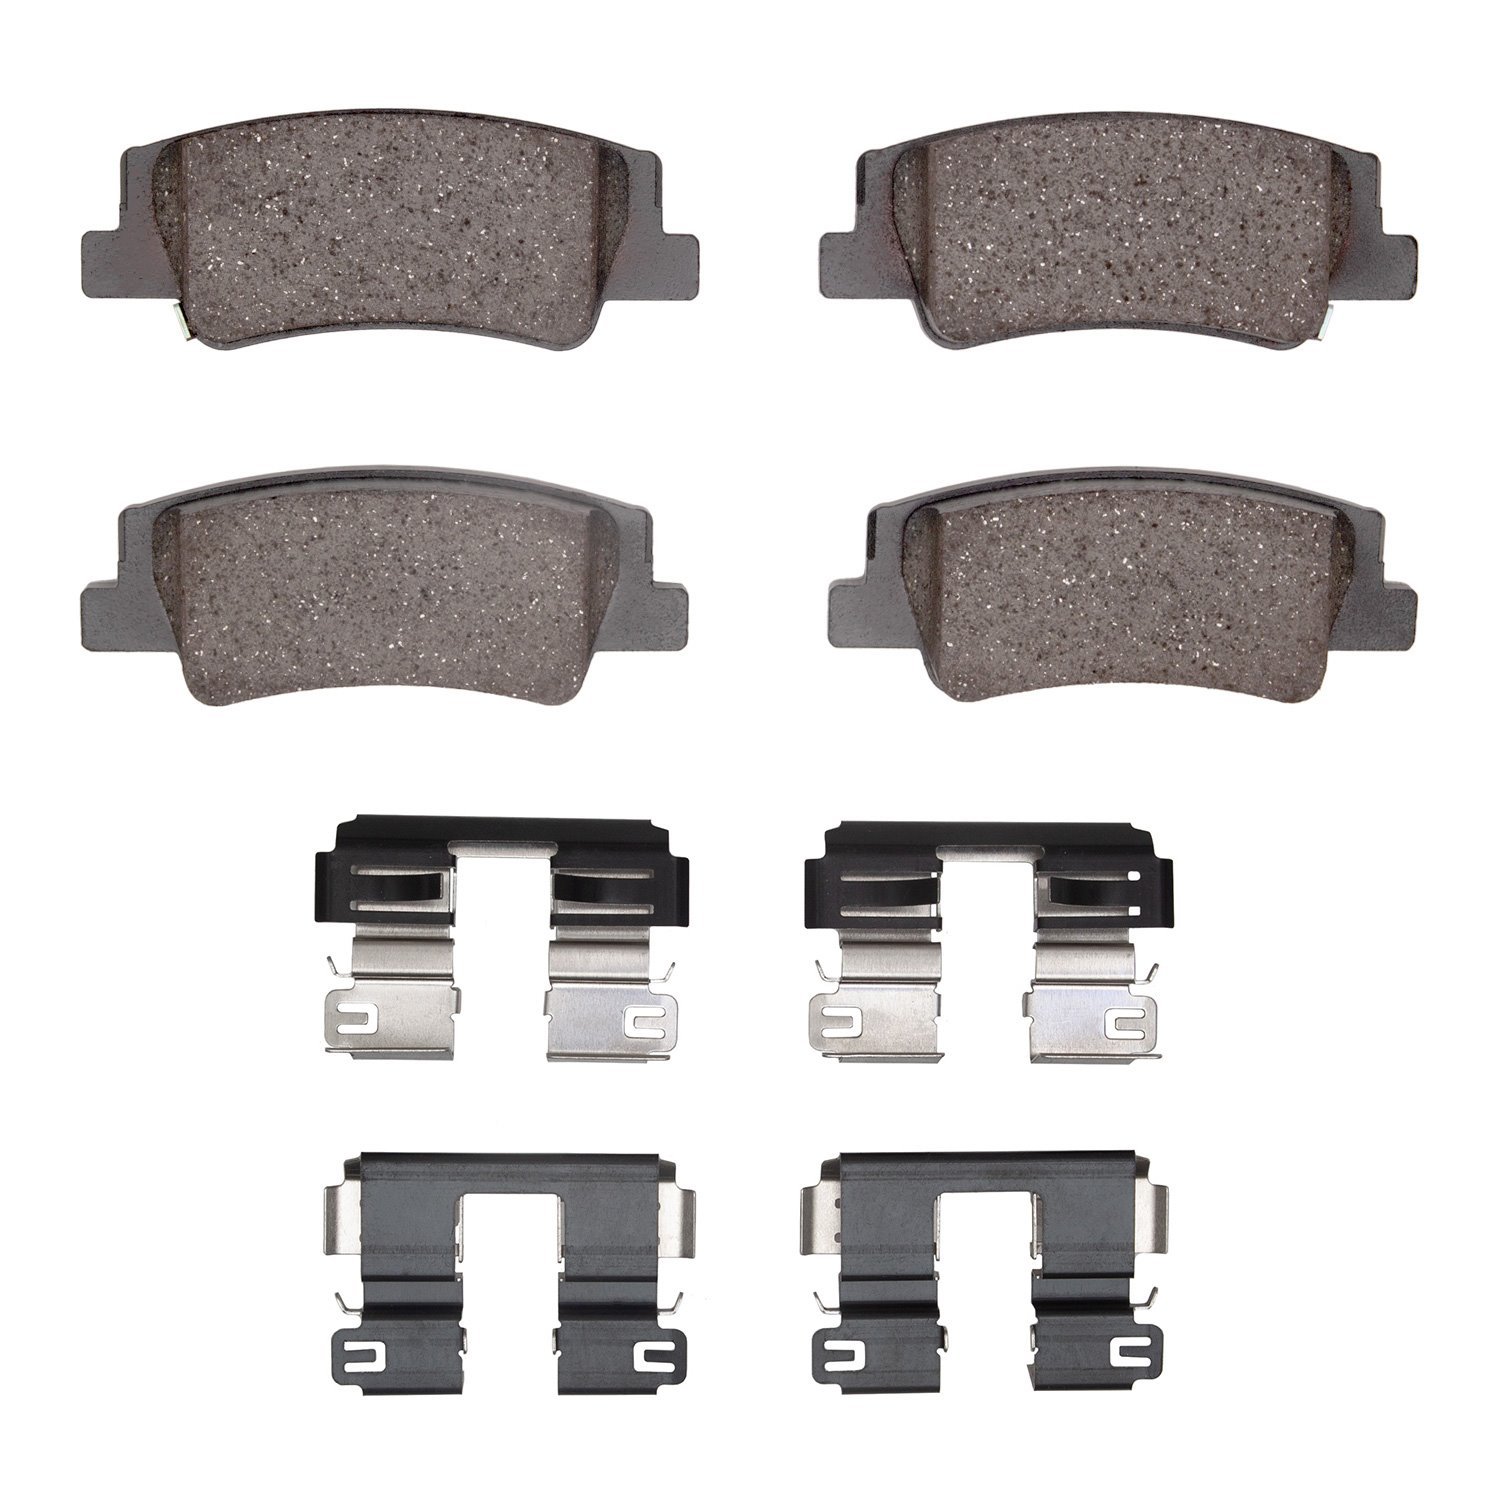 1310-2299-01 3000-Series Ceramic Brake Pads & Hardware Kit, Fits Select Kia/Hyundai/Genesis, Position: Rear